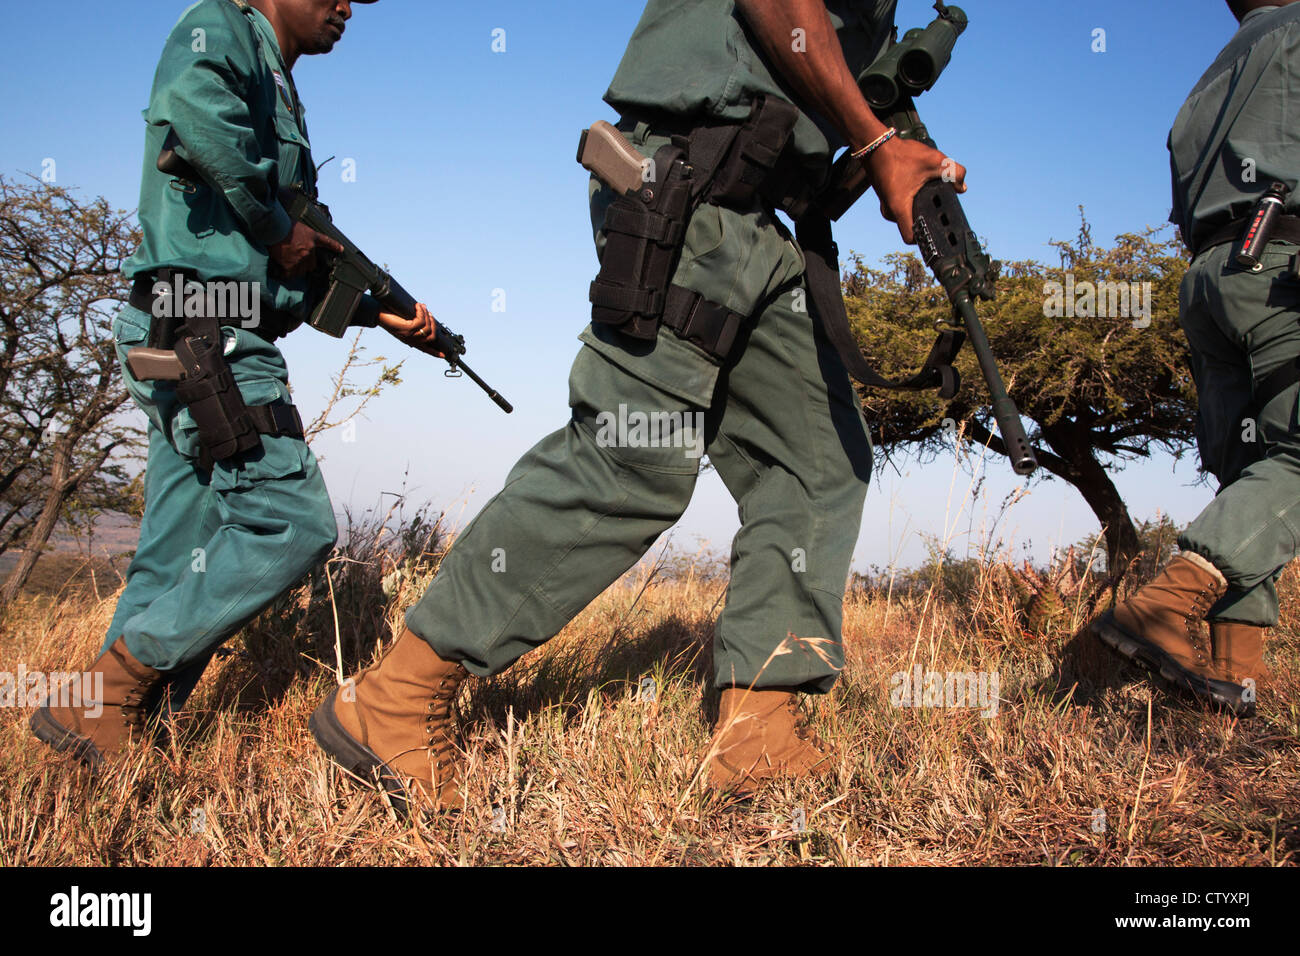 Anti-poaching unit on patrol in the bush, Ezemvelo KZN Wildlife, iMfolozi game reserve, South Africa Stock Photo